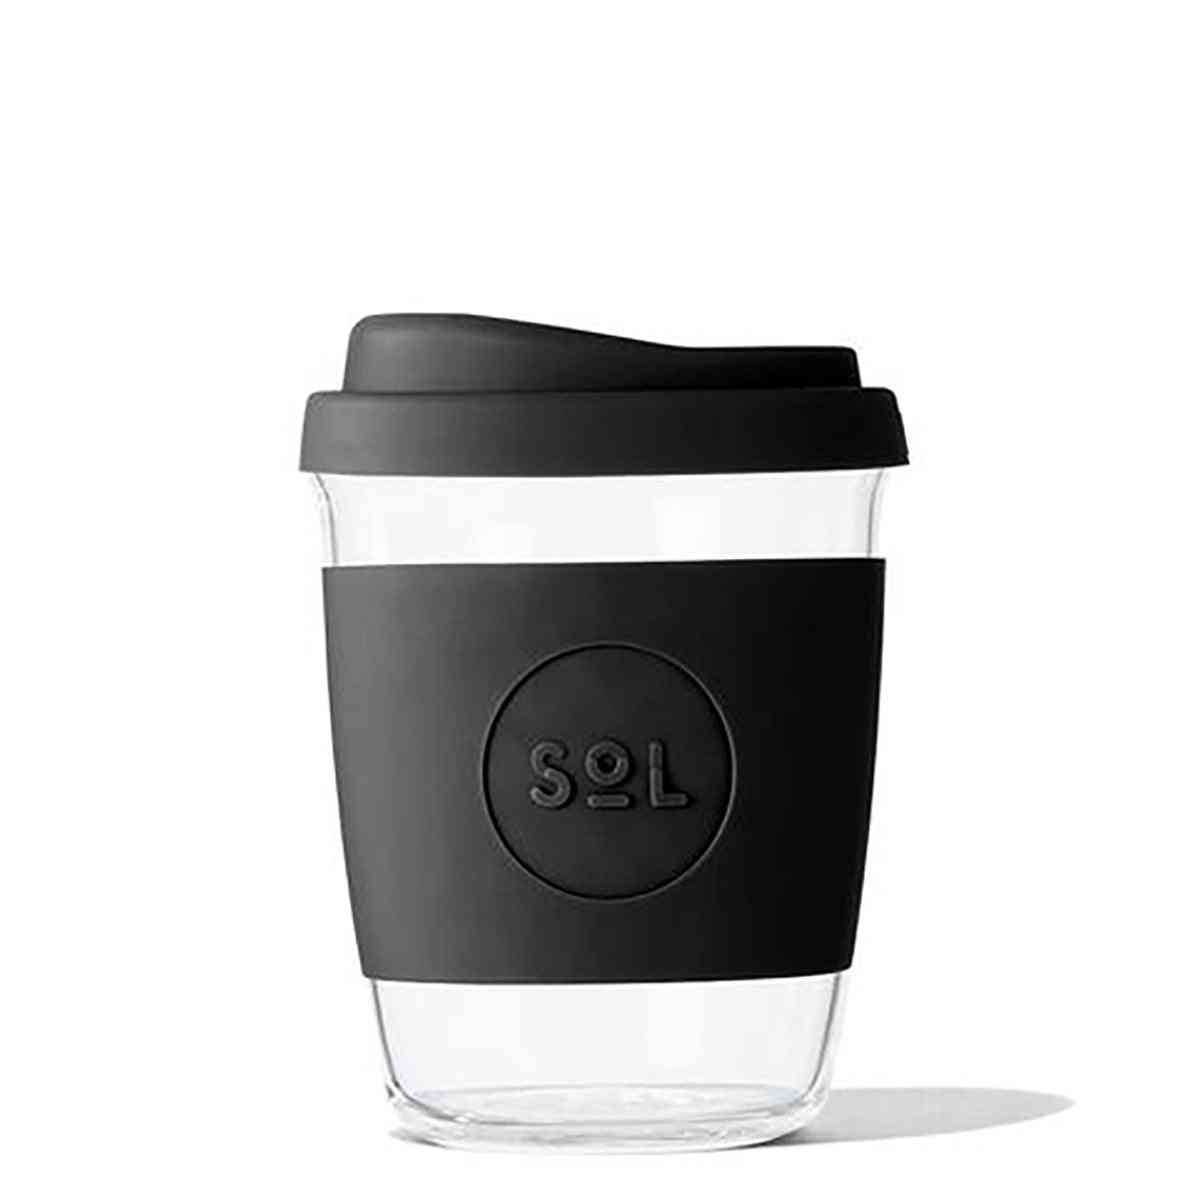 Sol Cups - Basalt Black - 8oz